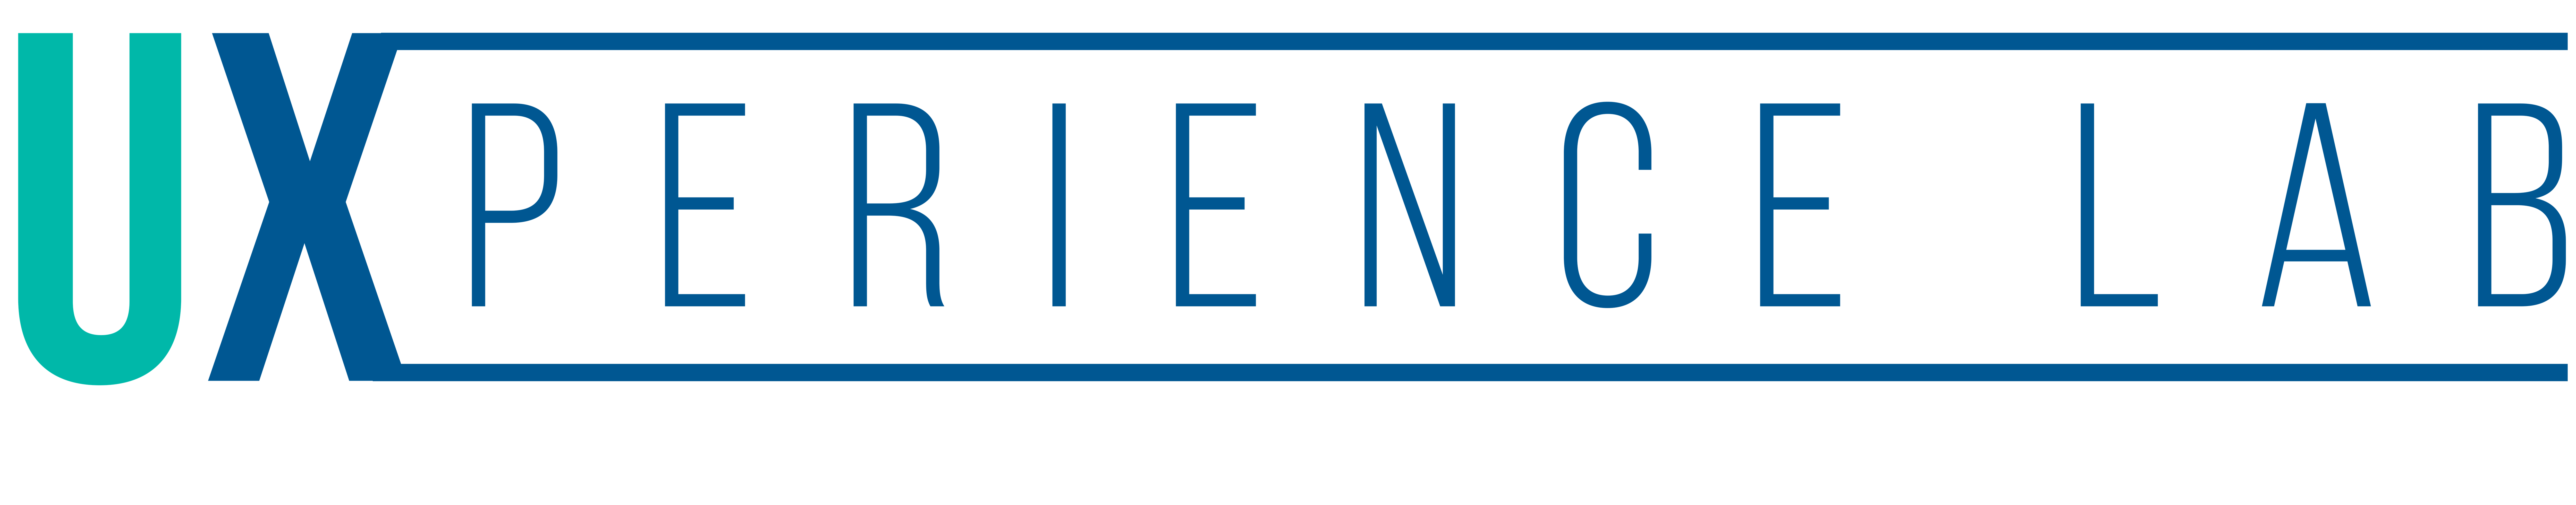 Uxperience Lab Agency Logo